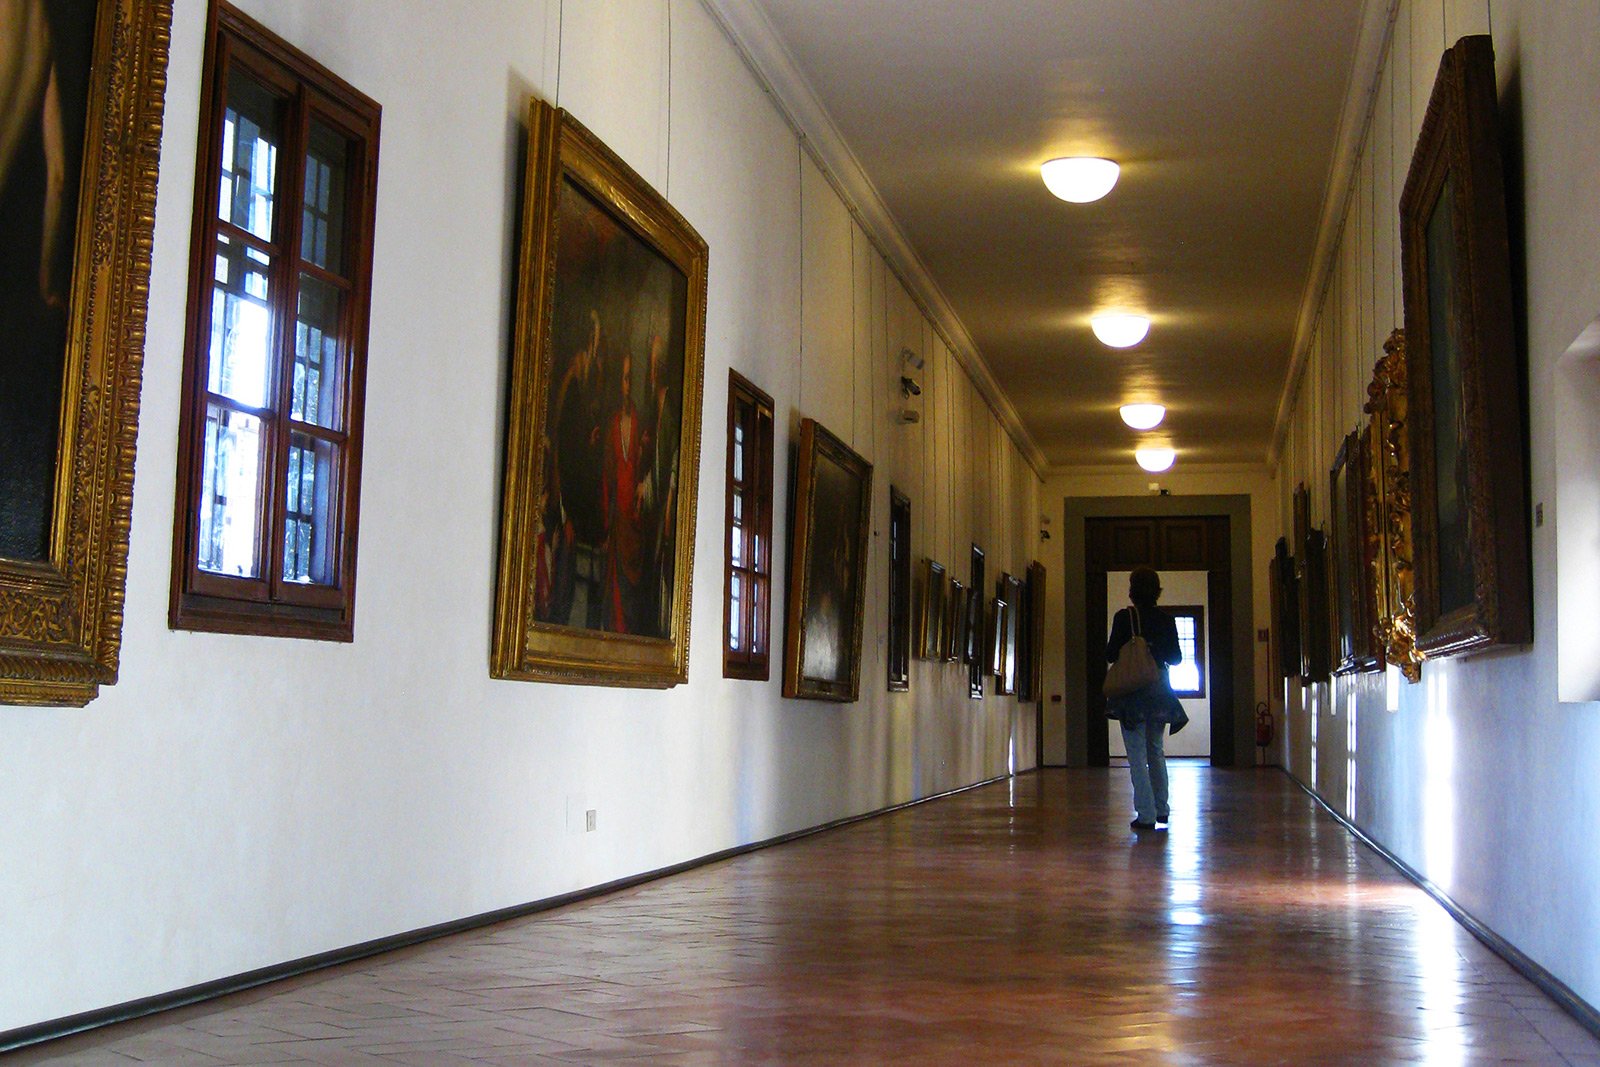 How to walk through the Vasari Corridor in Florence